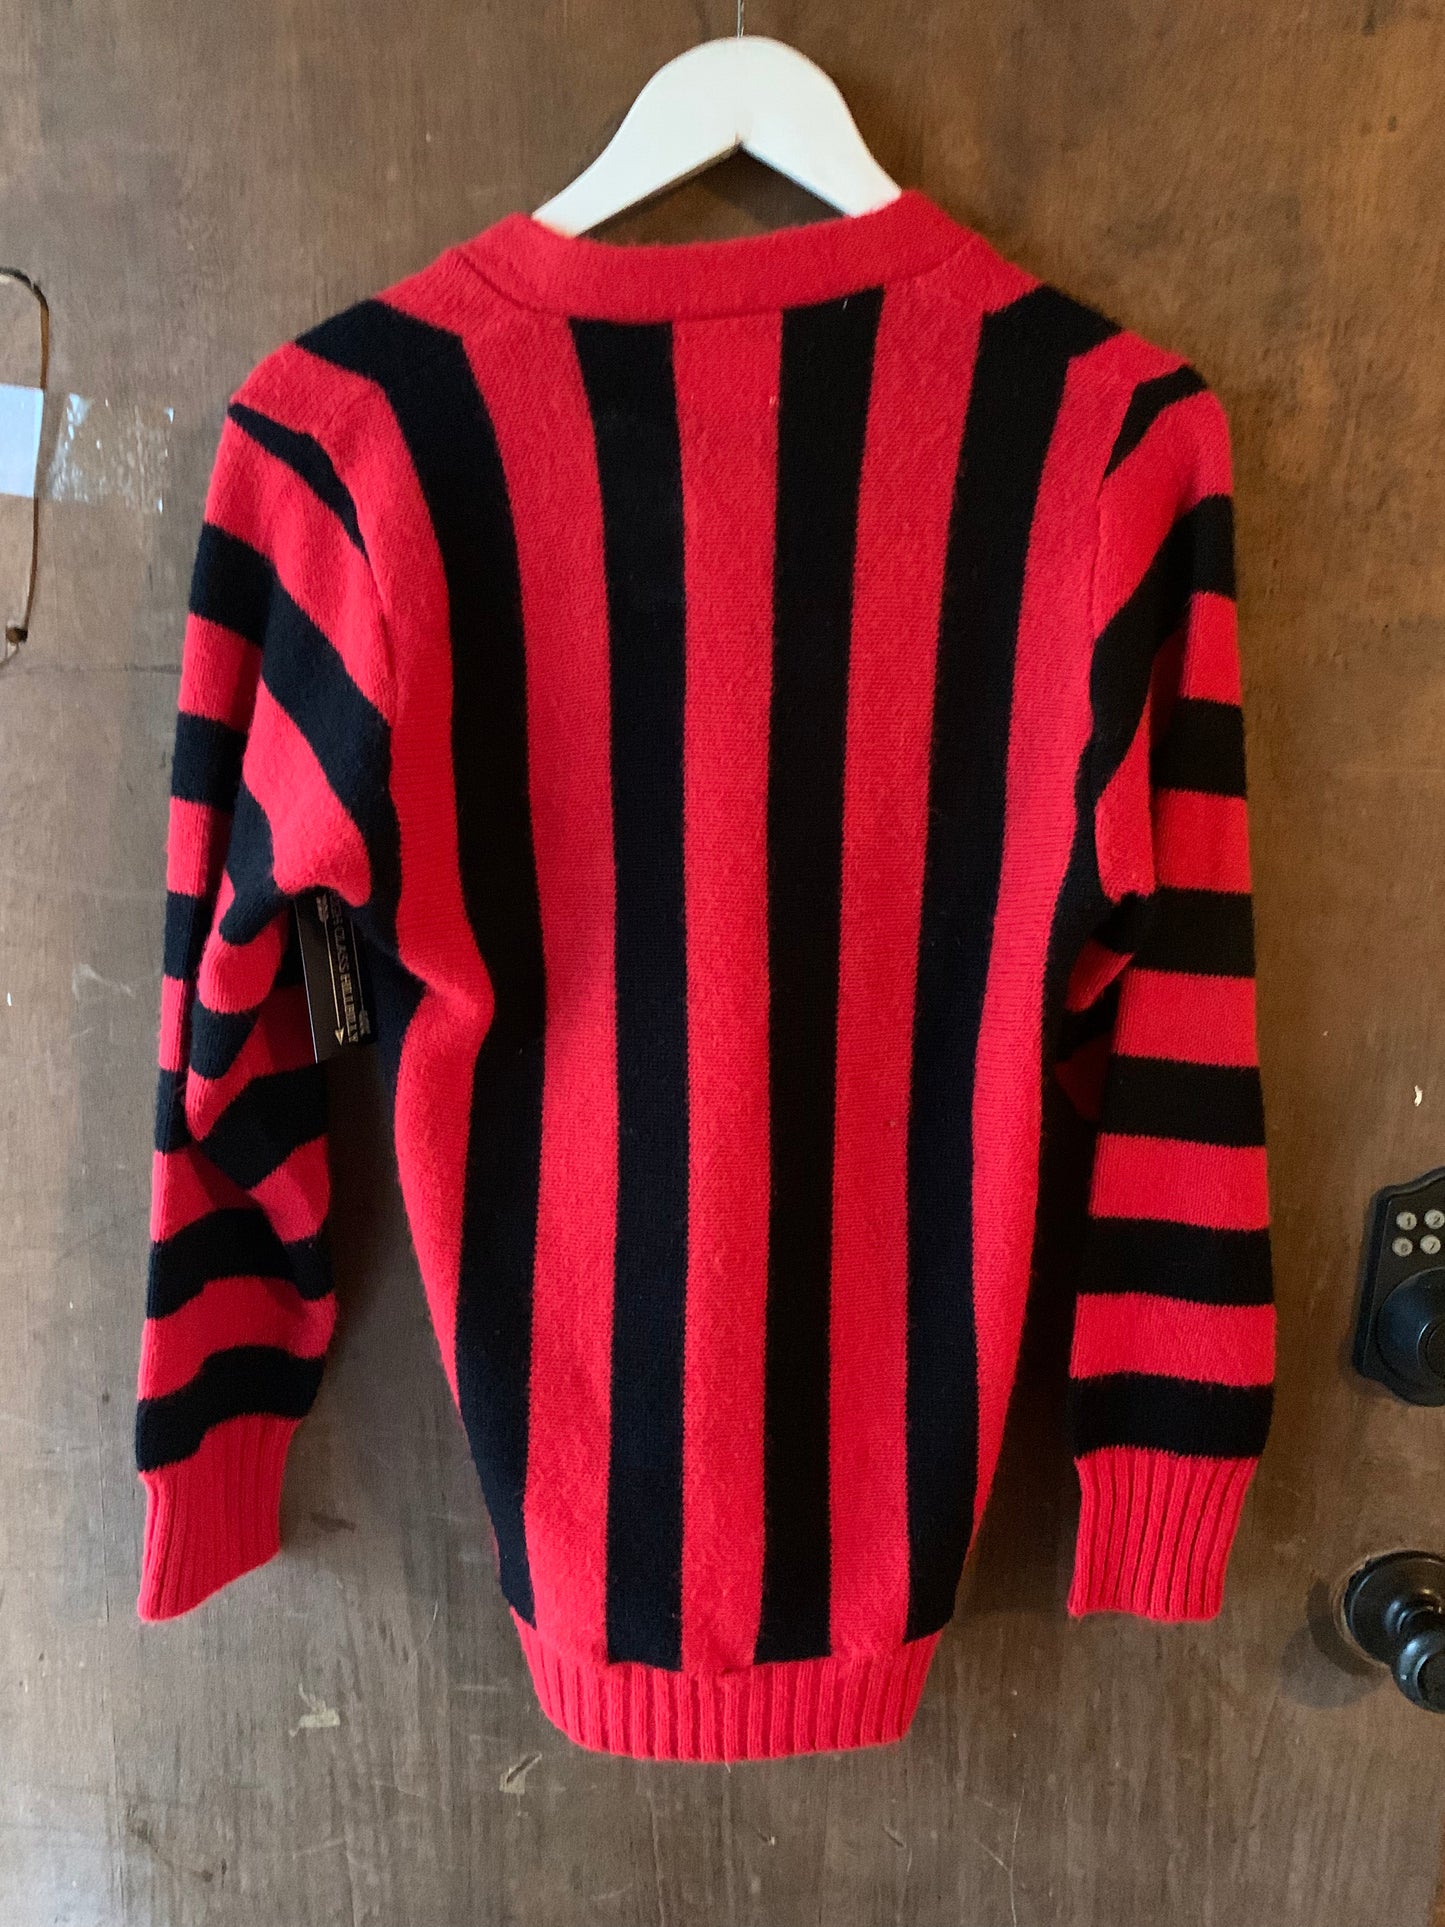 Red & Black Striped V Neck Sweater (M)